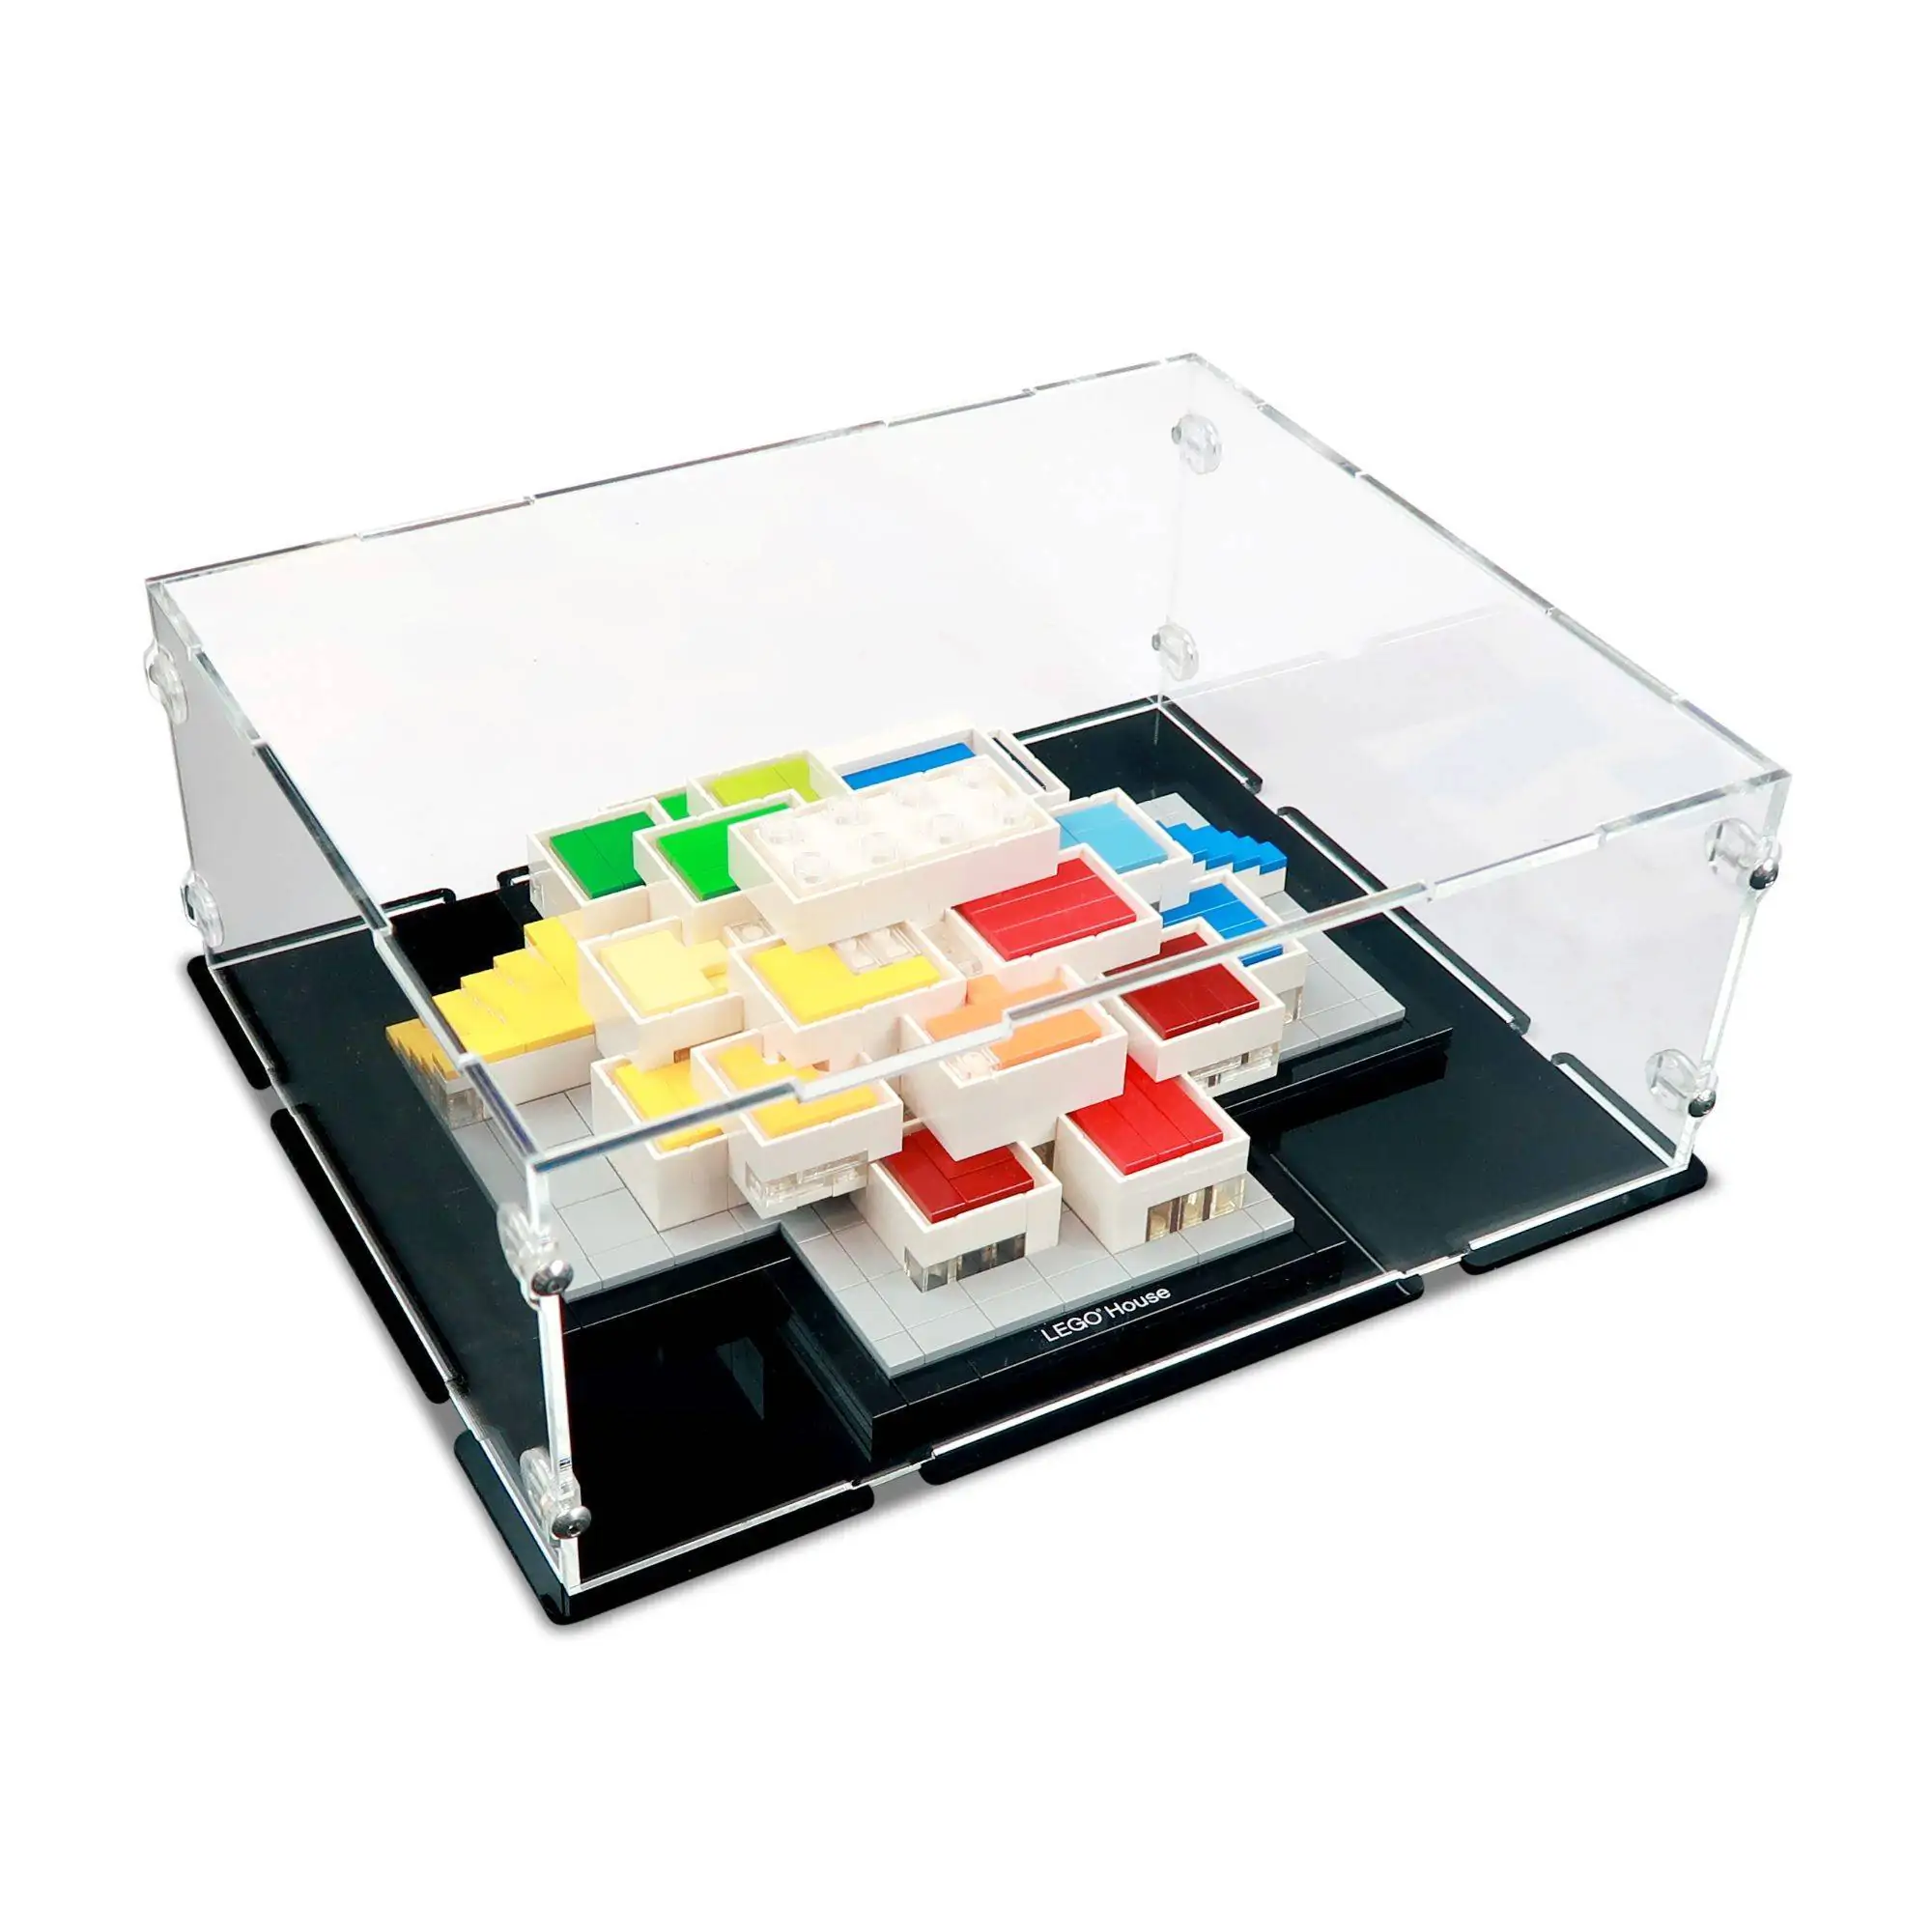 Acrylic Display Case for LEGO House iDisplayit